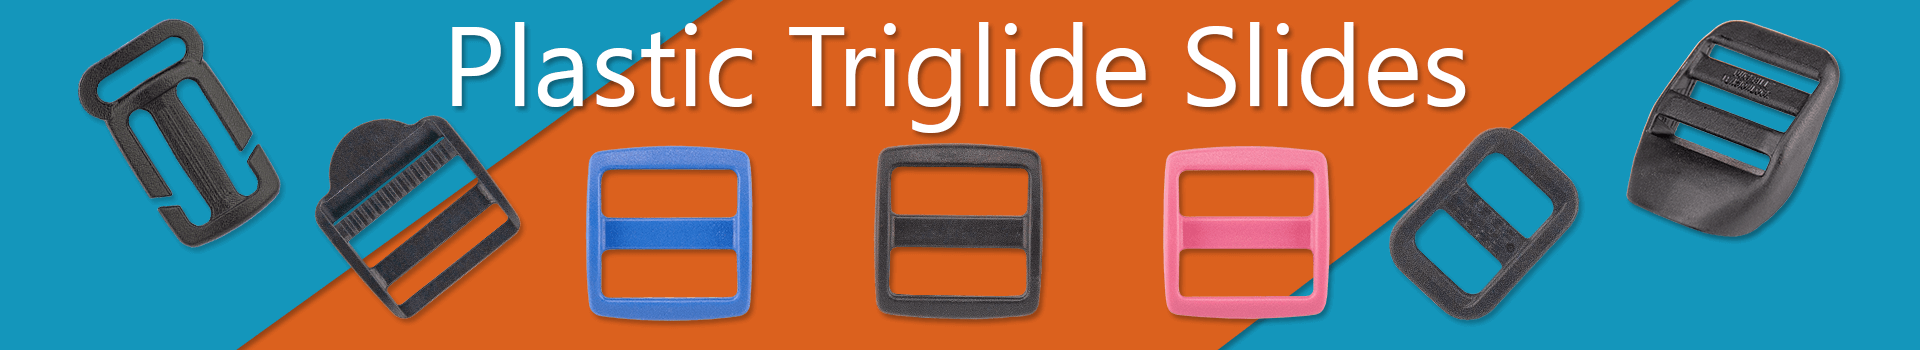 Plastic Triglide Slides